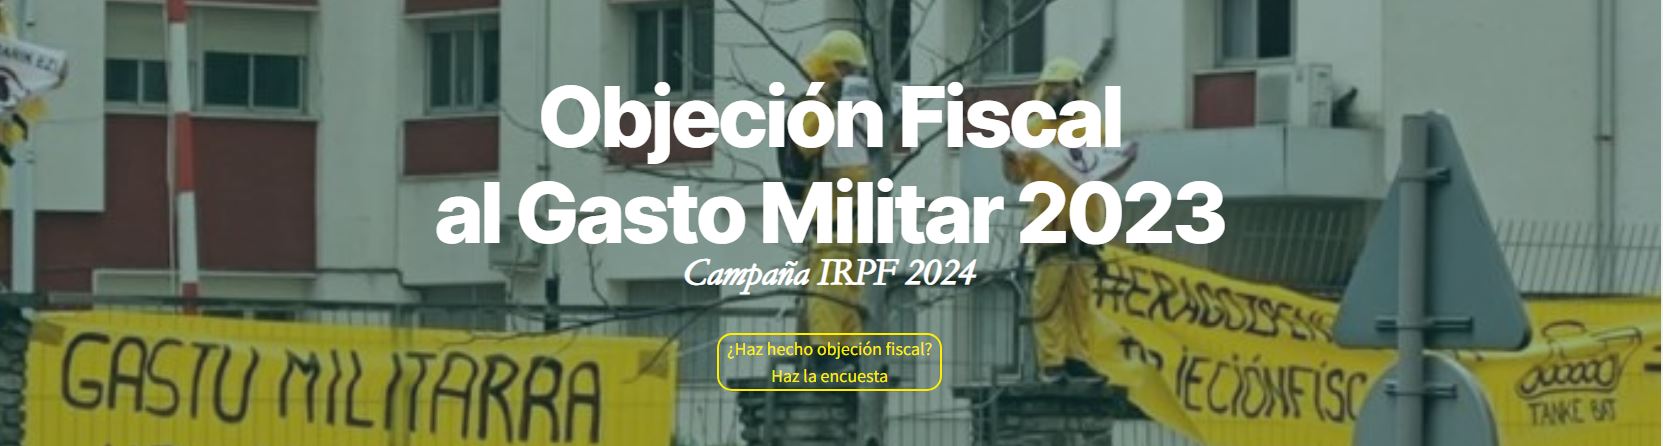 Objeción Fiscal al Gasto Militar IRPF 2023 campaña 2024